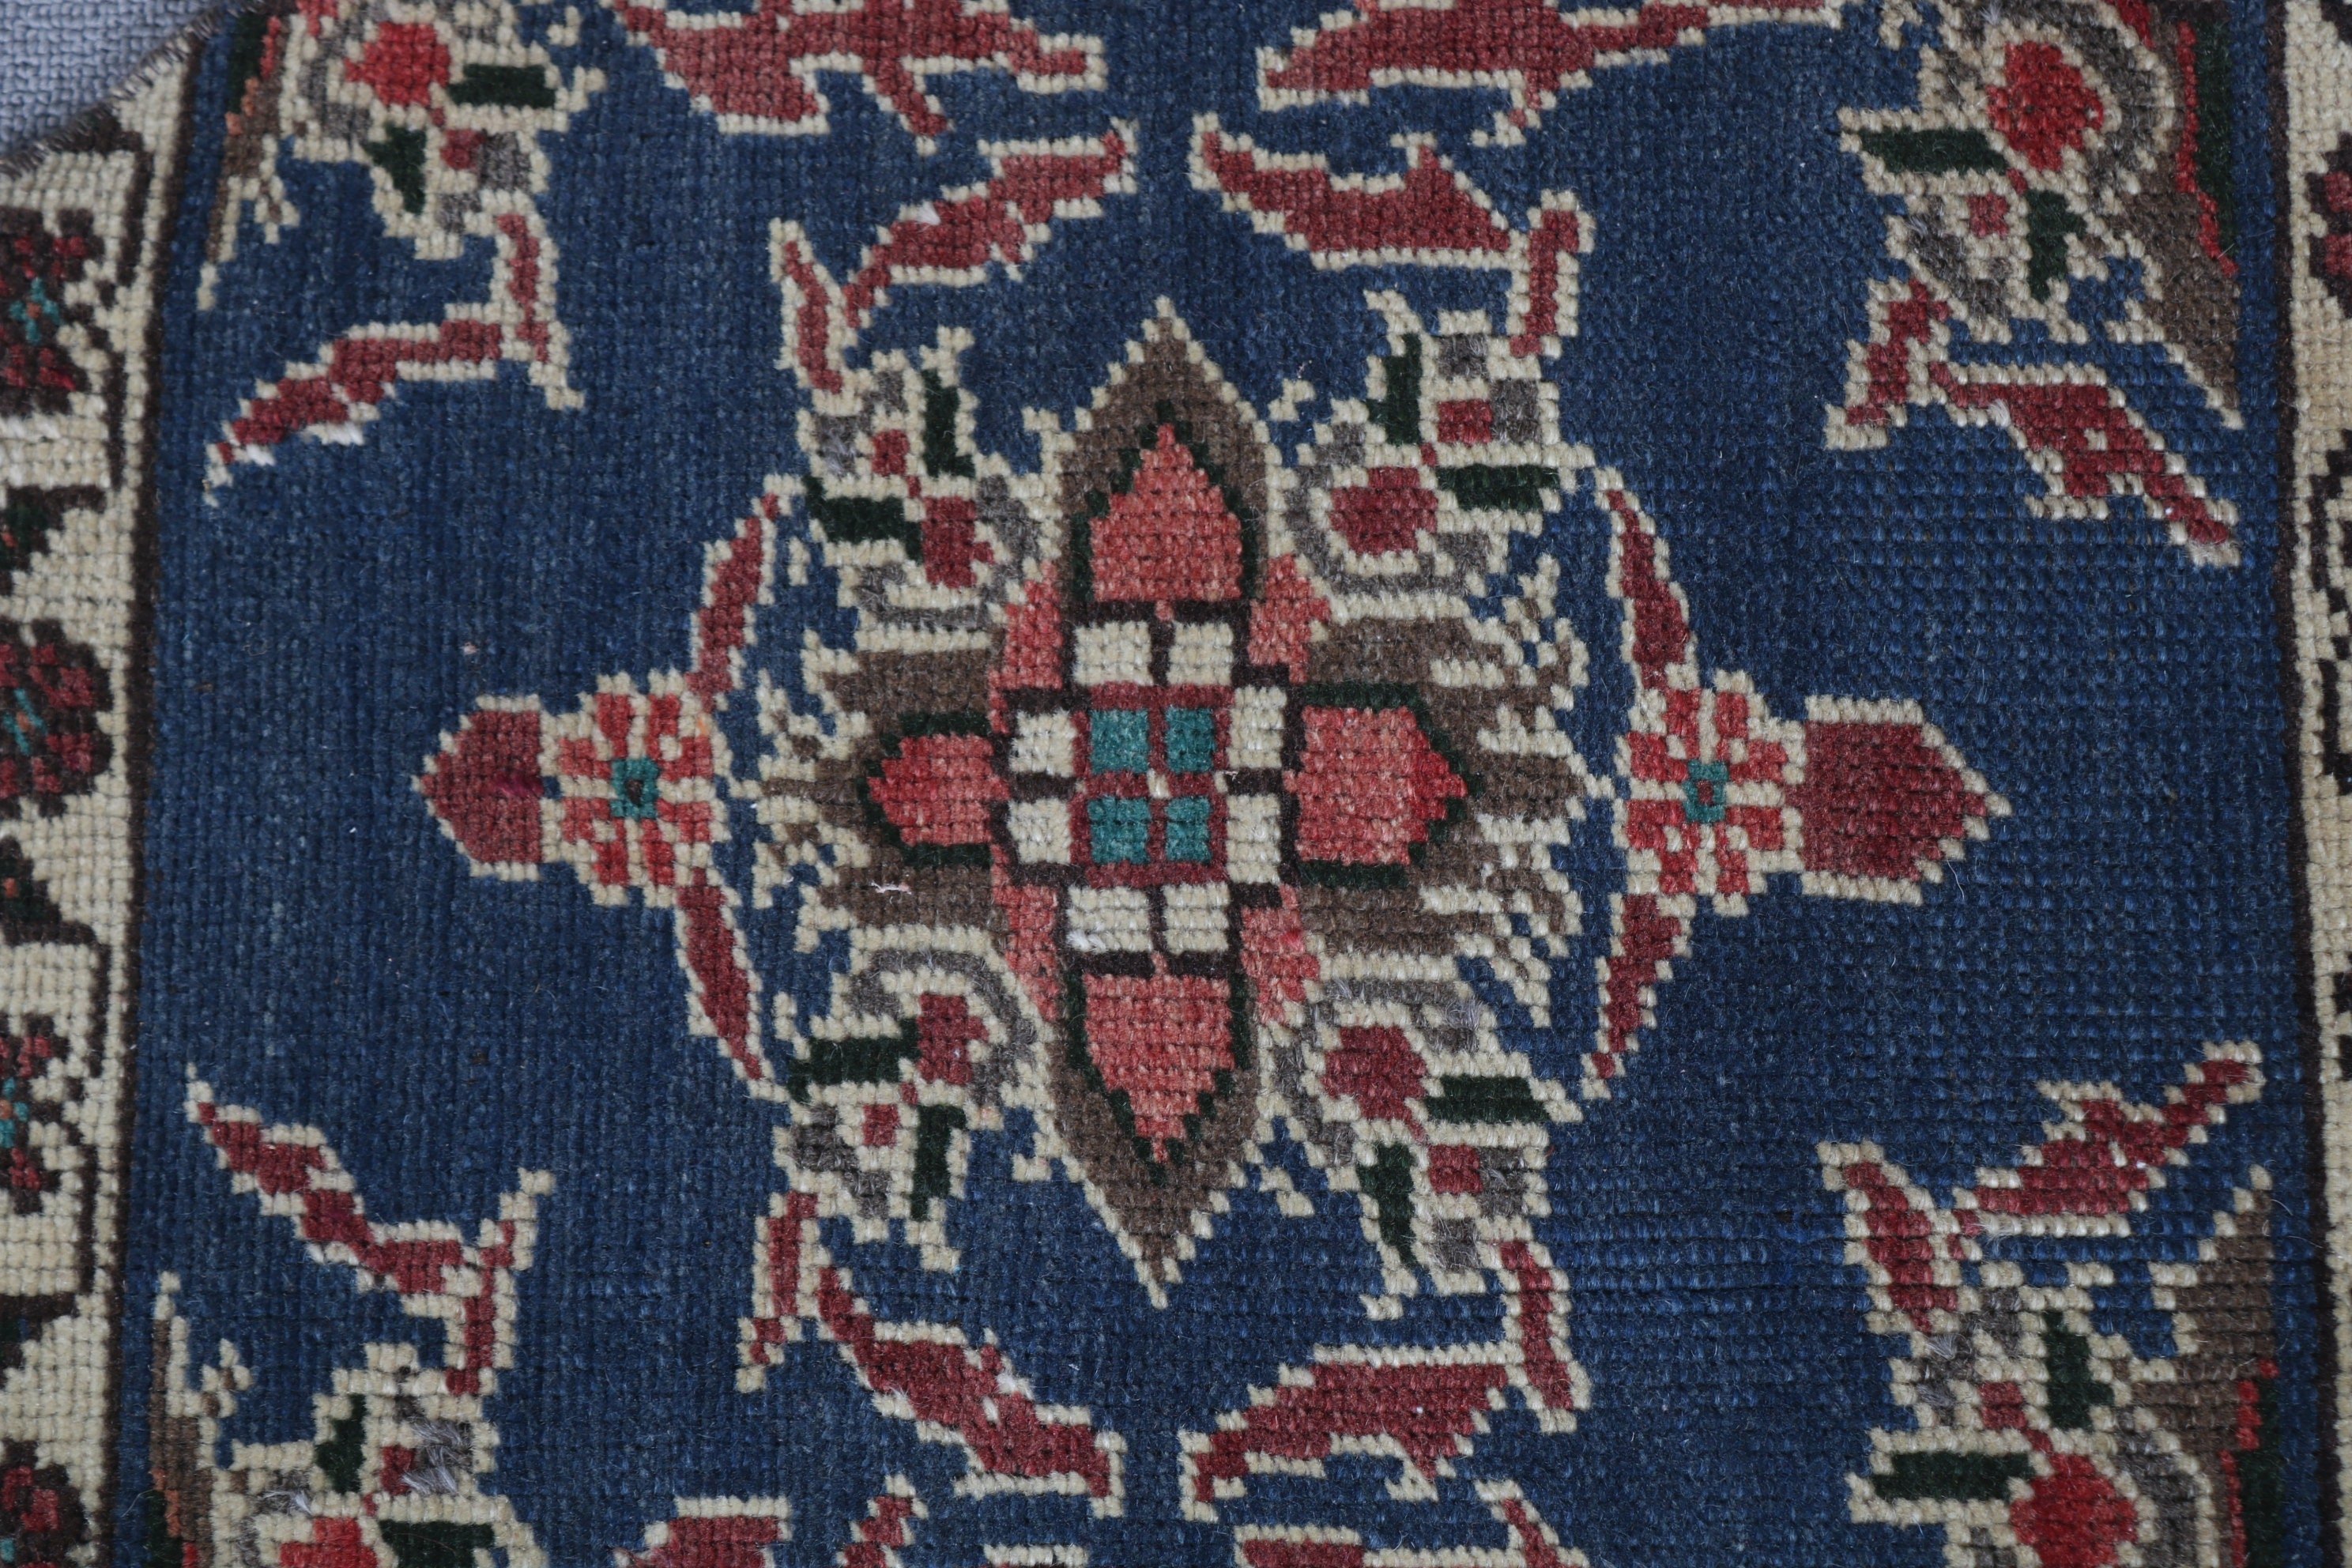 Floor Rug, Blue Floor Rug, Wall Hanging Rugs, Turkish Rug, 1.6x1.5 ft Small Rugs, Vintage Rug, Rugs for Bath, Moroccan Rug, Kitchen Rugs